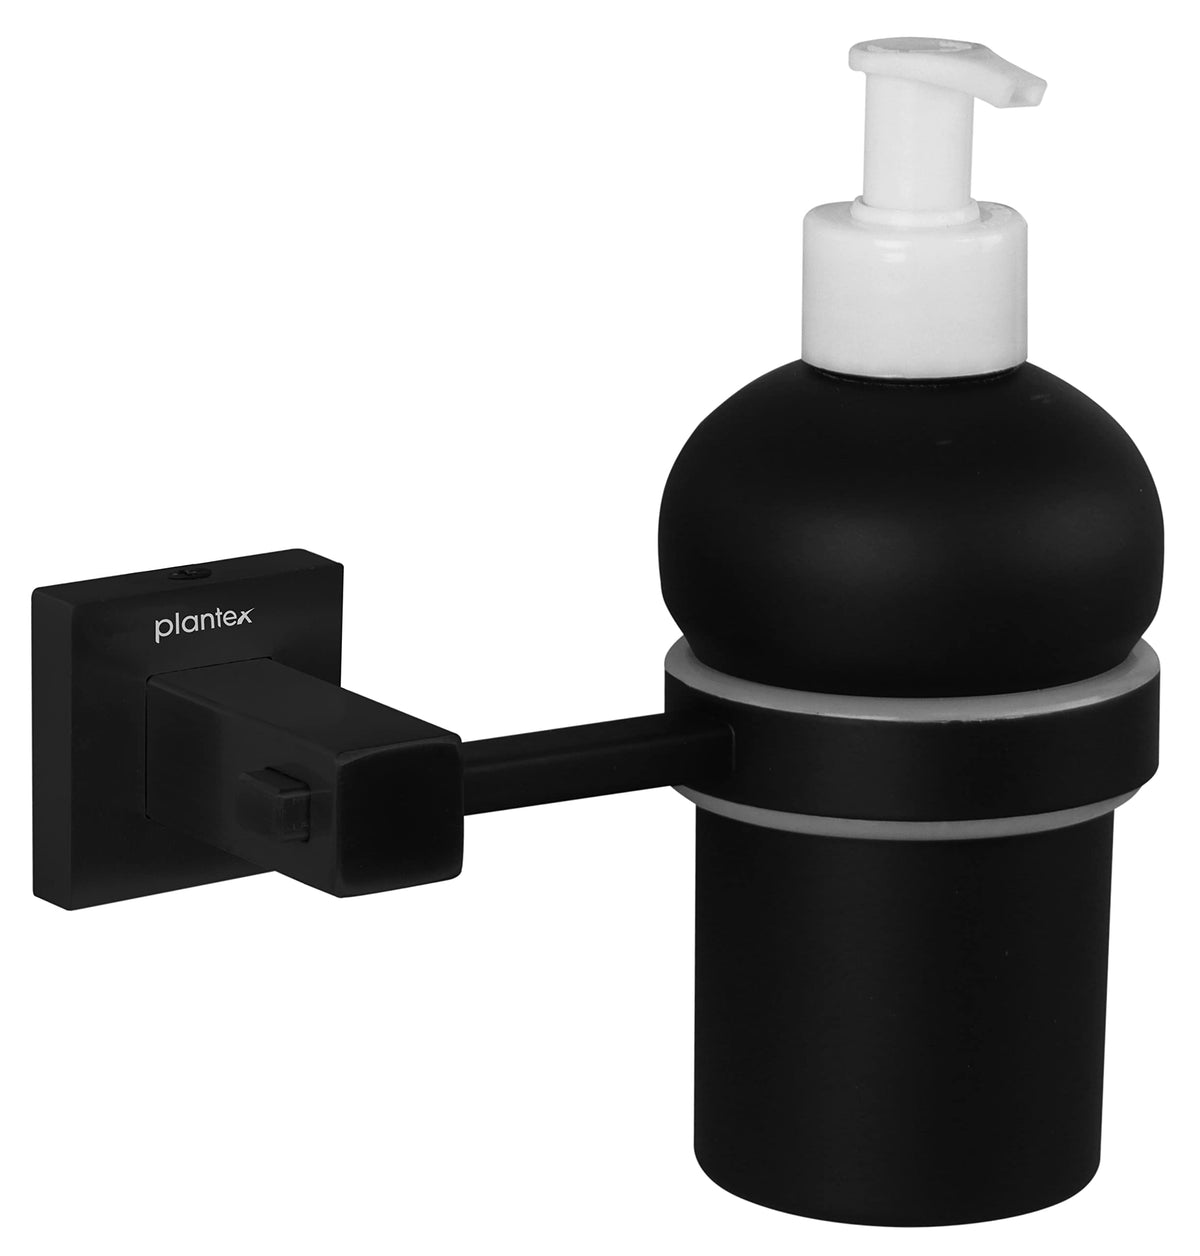 Plantex 304 Grade Stainless Steel Hand Wash Holder for Wash Basin Liquid Soap Dispenser/Bathroom Accessories - Splash (Black)